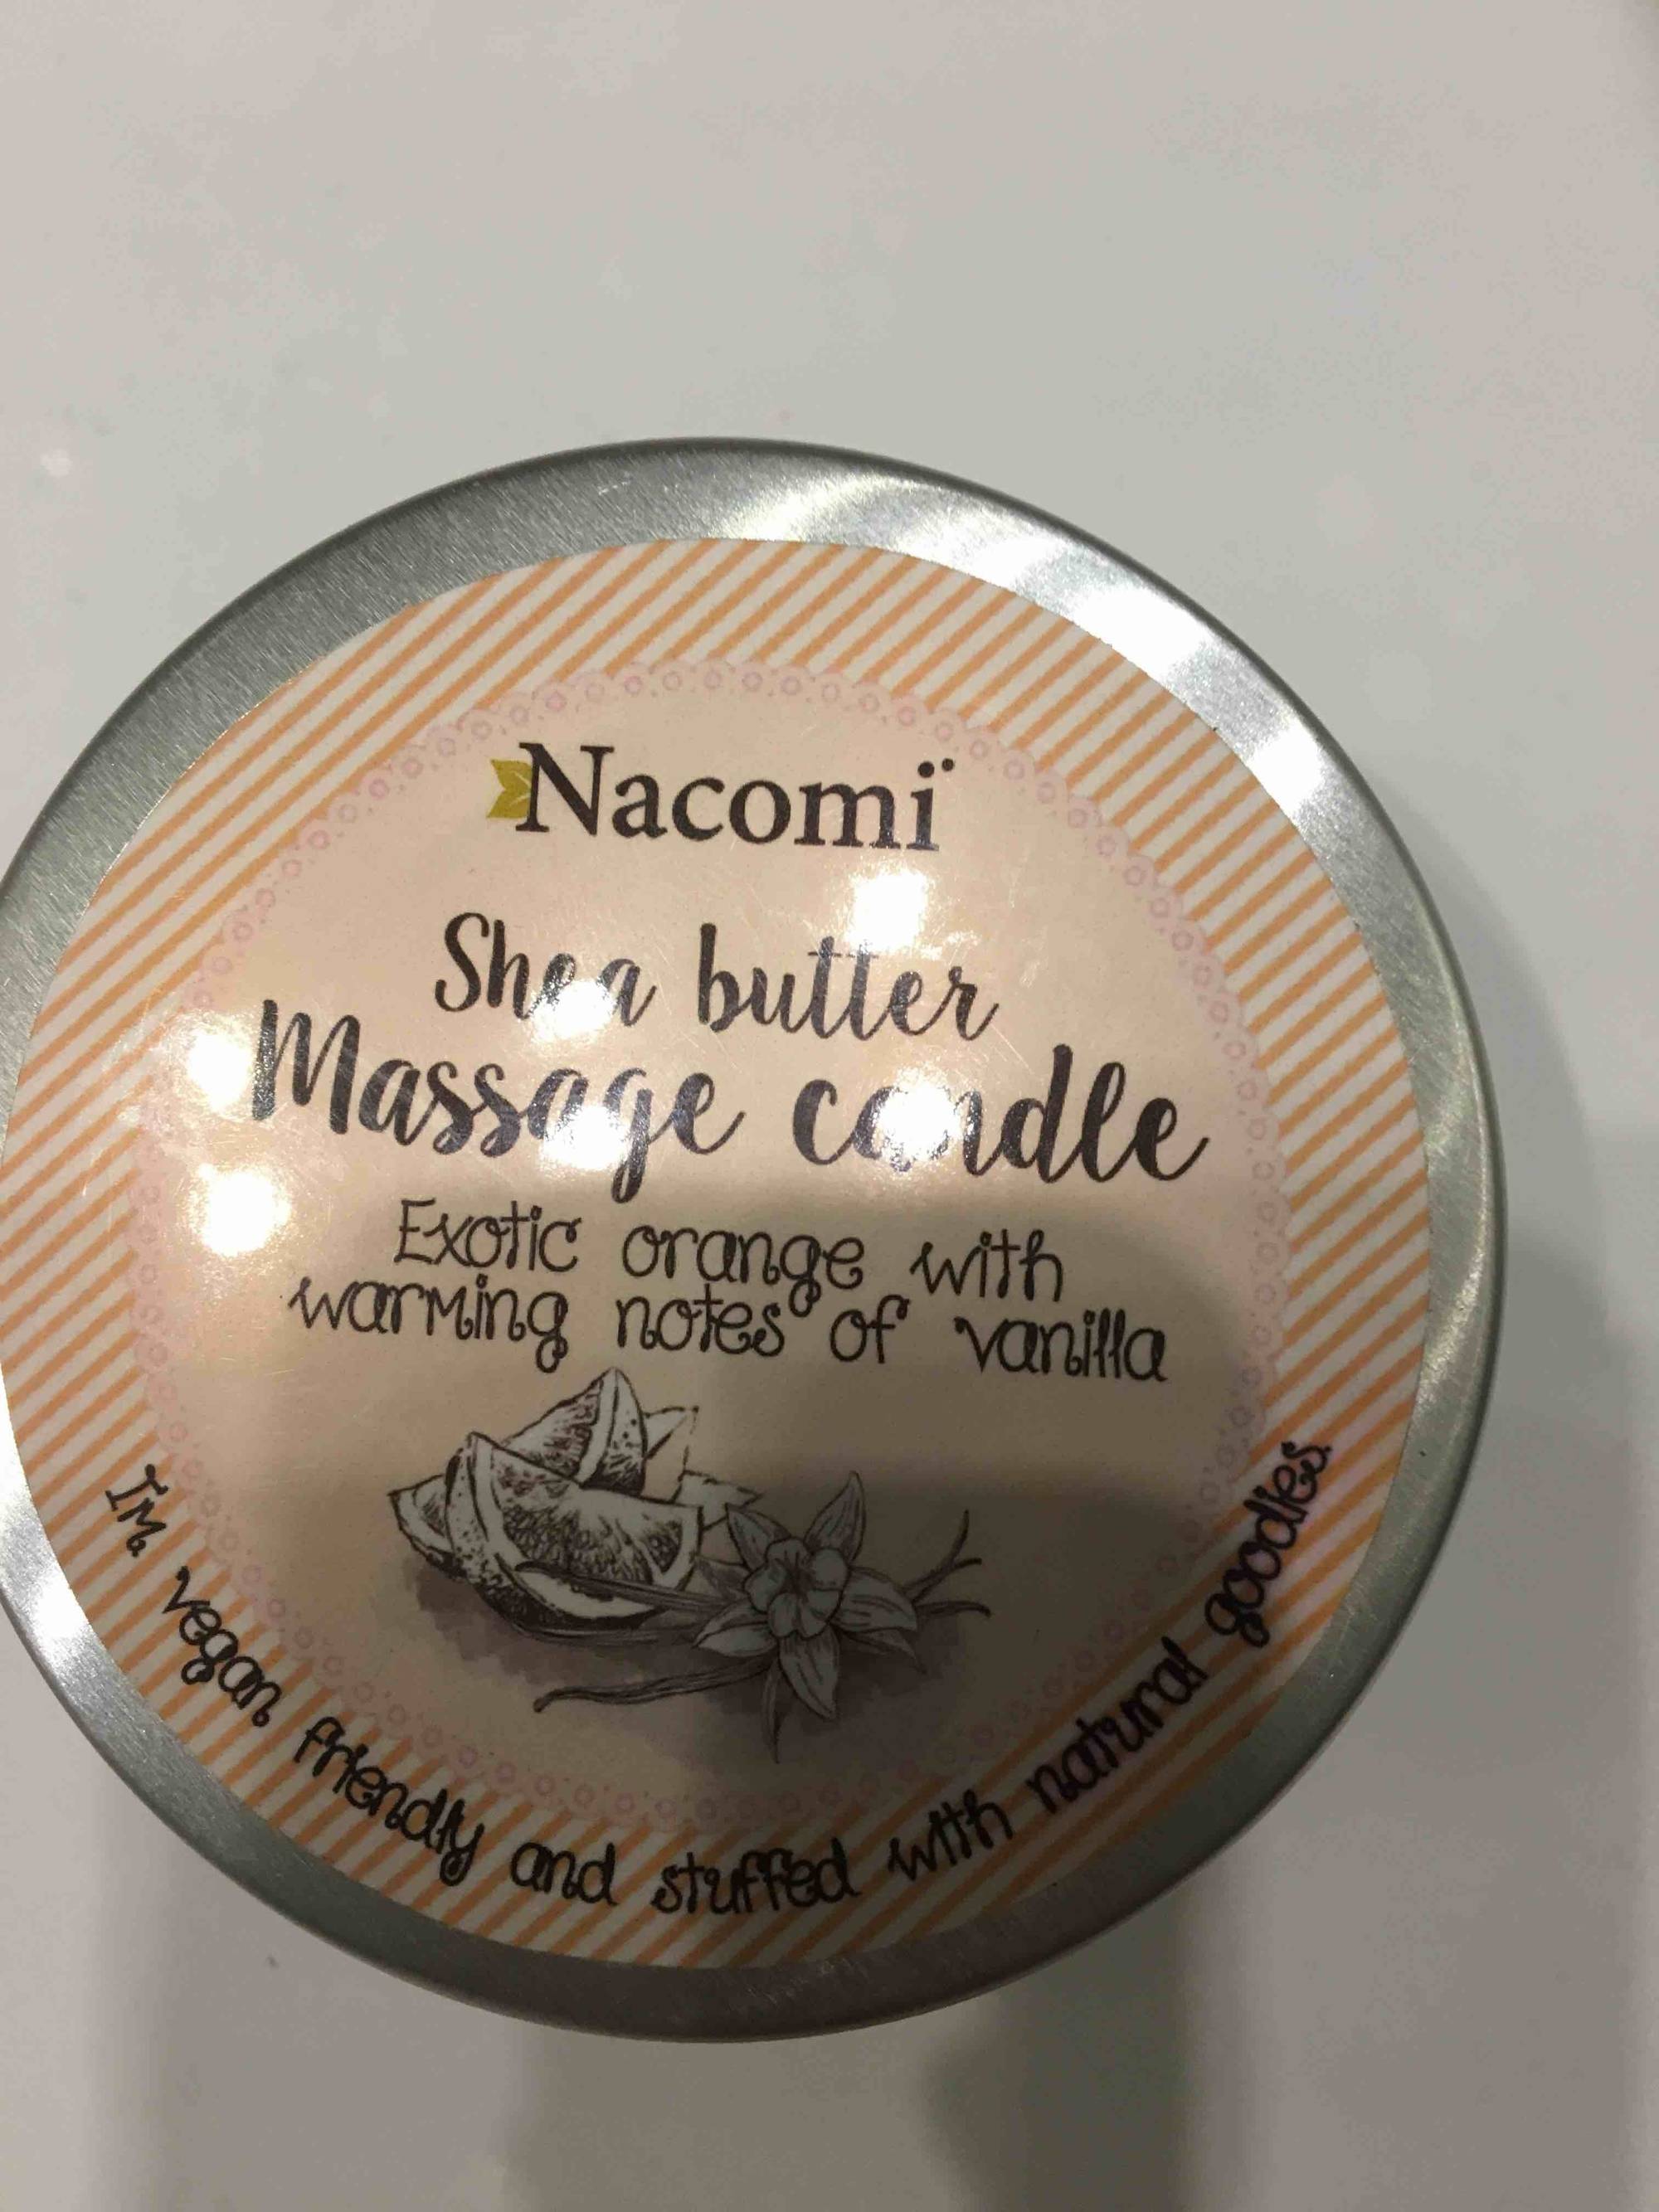 NACOMI - Shea butter massage candle